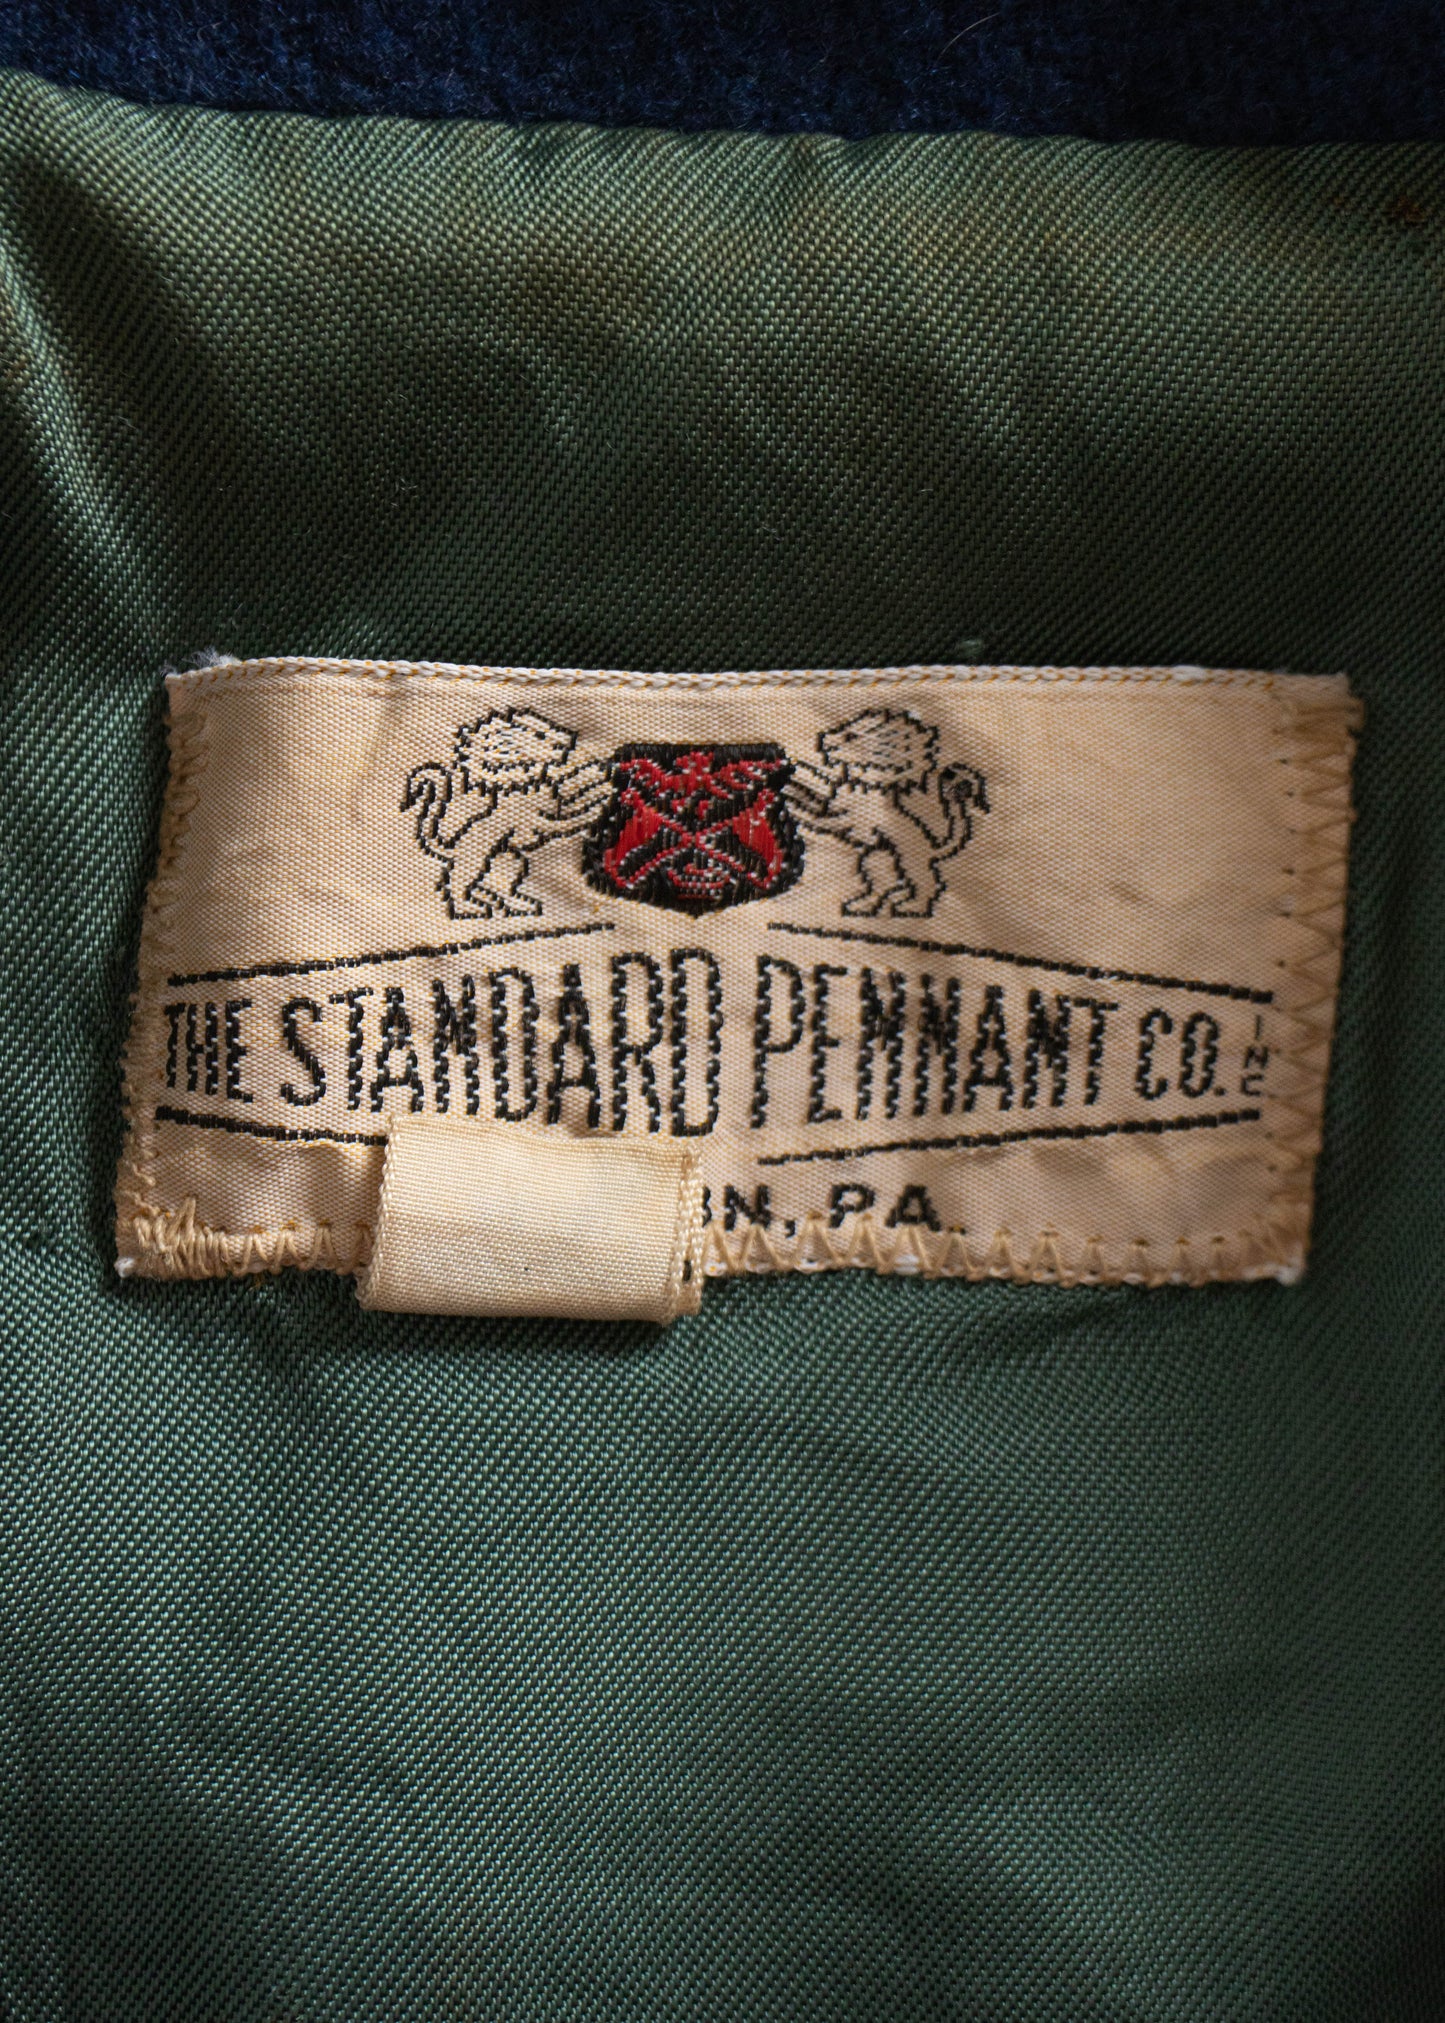 Vintage 1960s The Standard Pennant Co. Hampton Colour Guard Varsity Jacket Size S/M